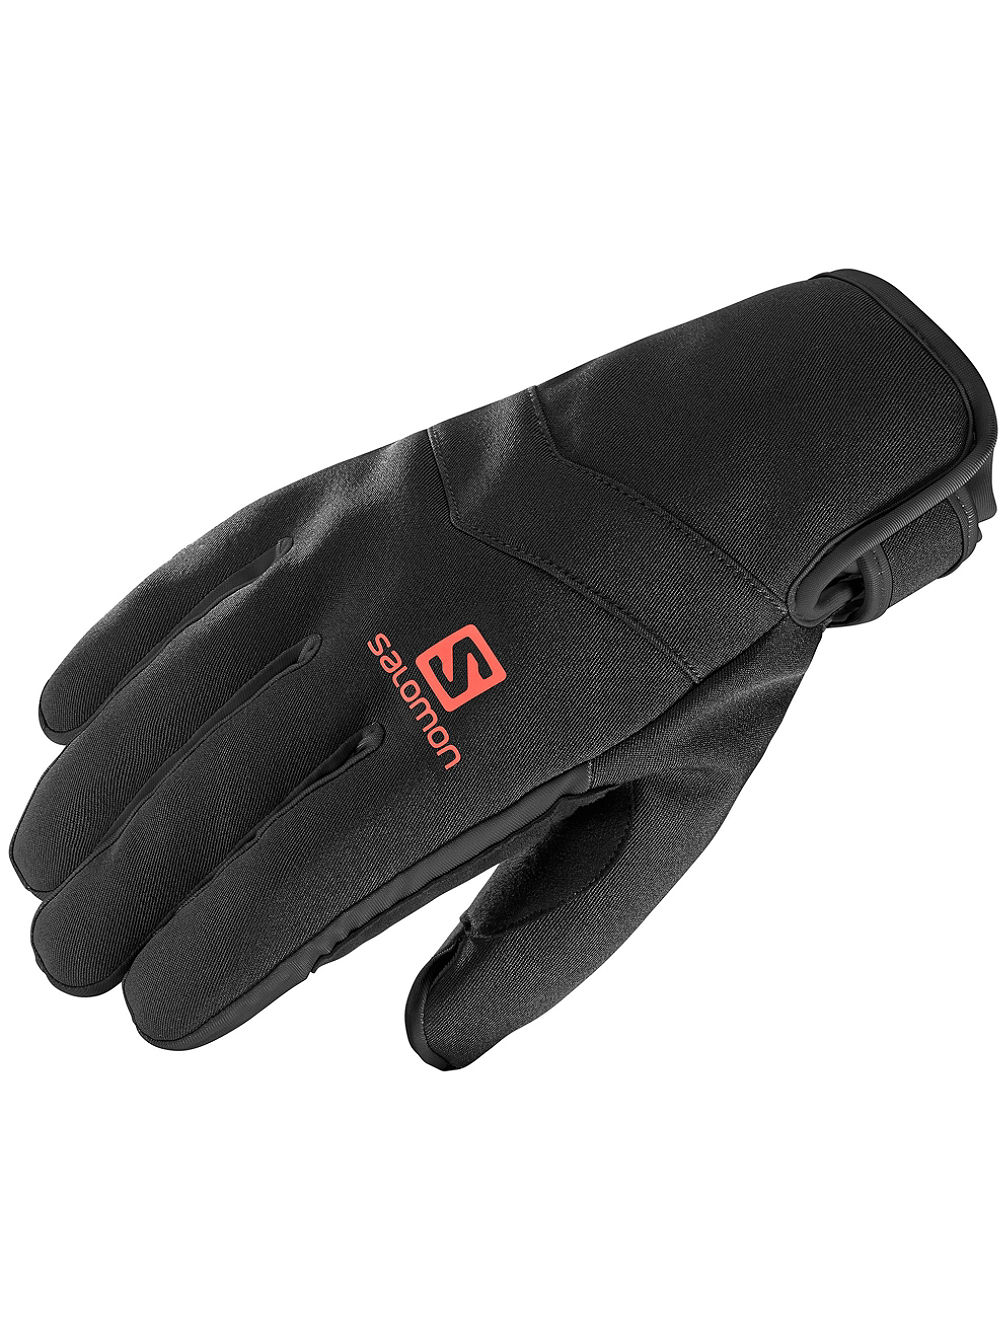 Rs Warm Gloves